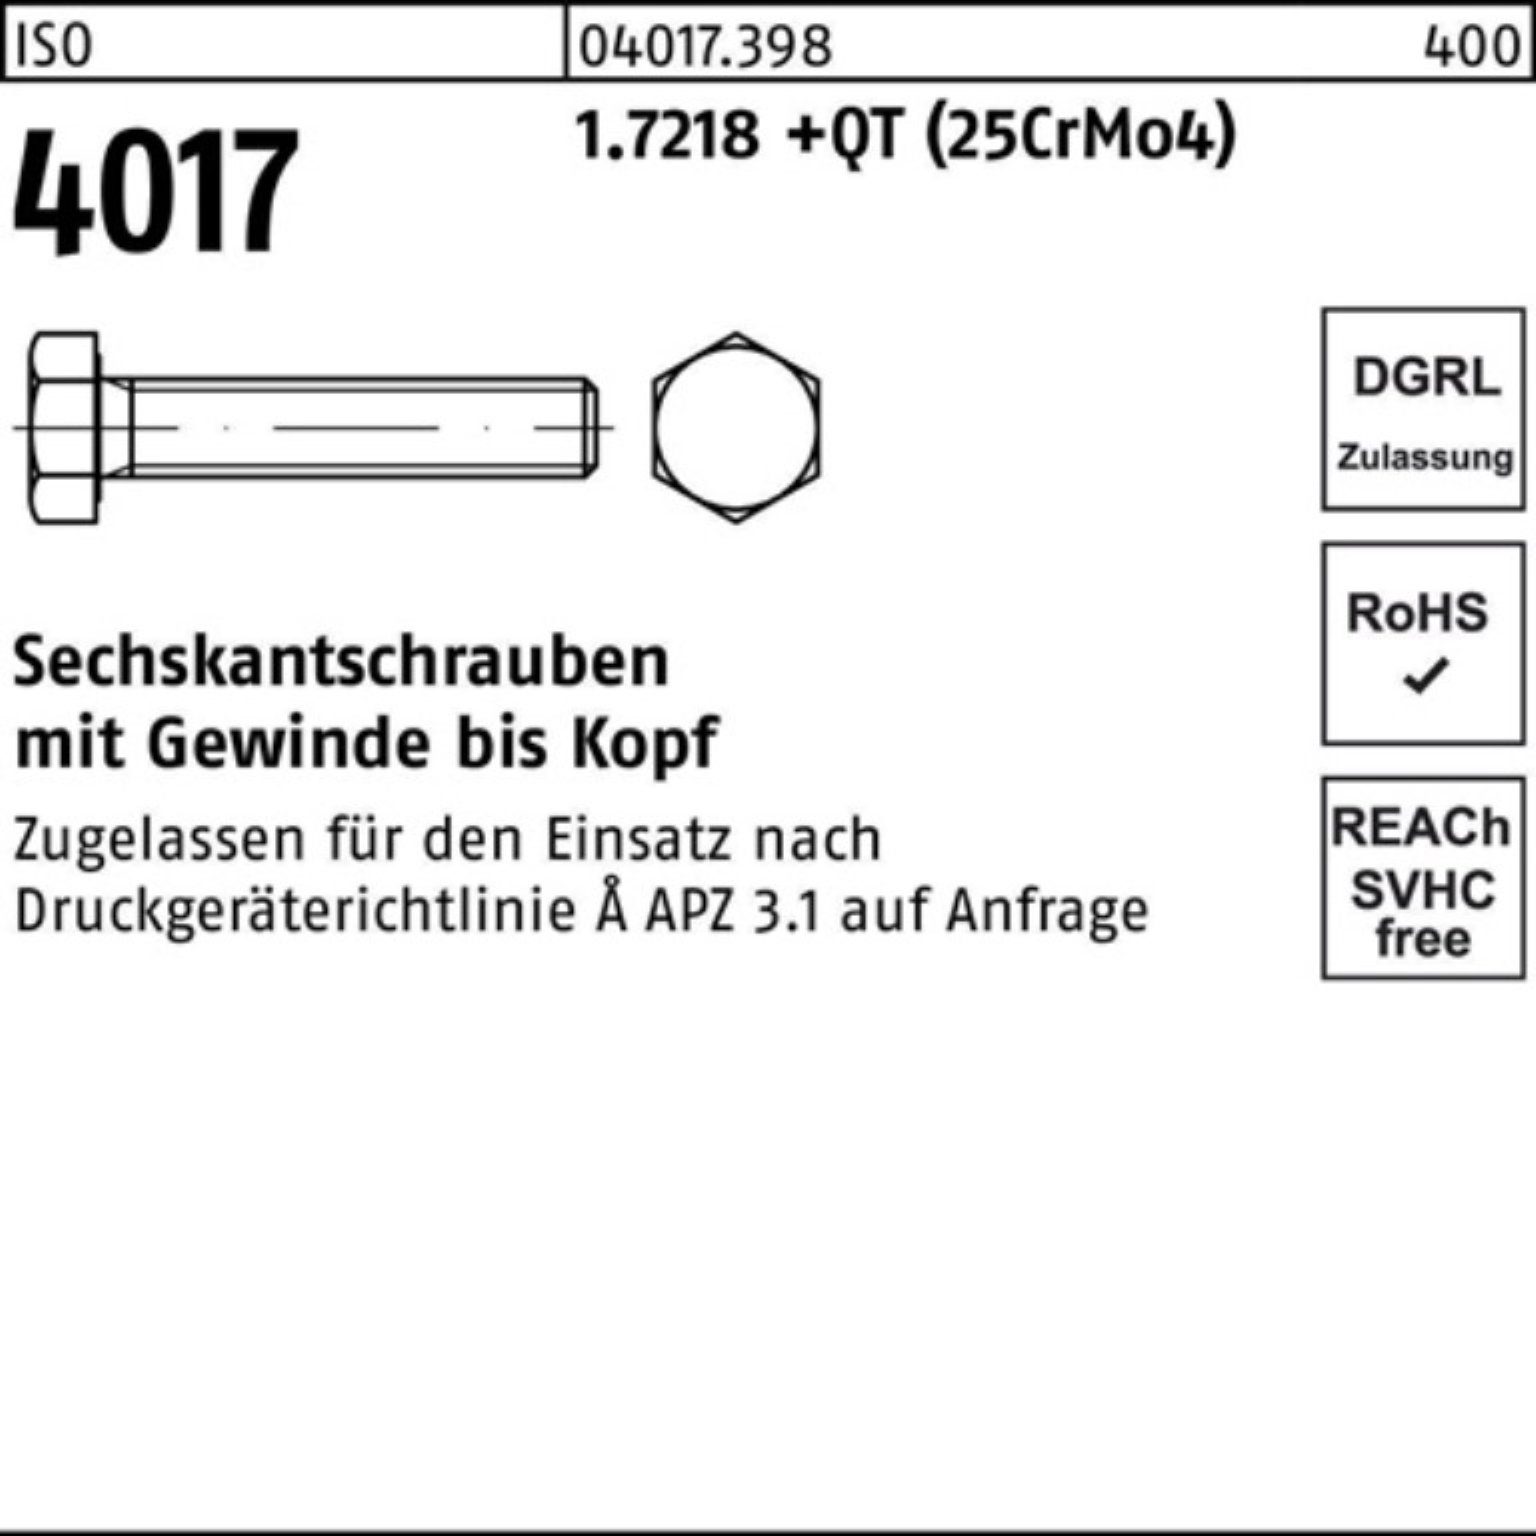 Bufab Sechskantschraube +QT 4017 (25CrMo4) ISO 50 VG Sechskantschraube 1.7218 Pack M16x 100er